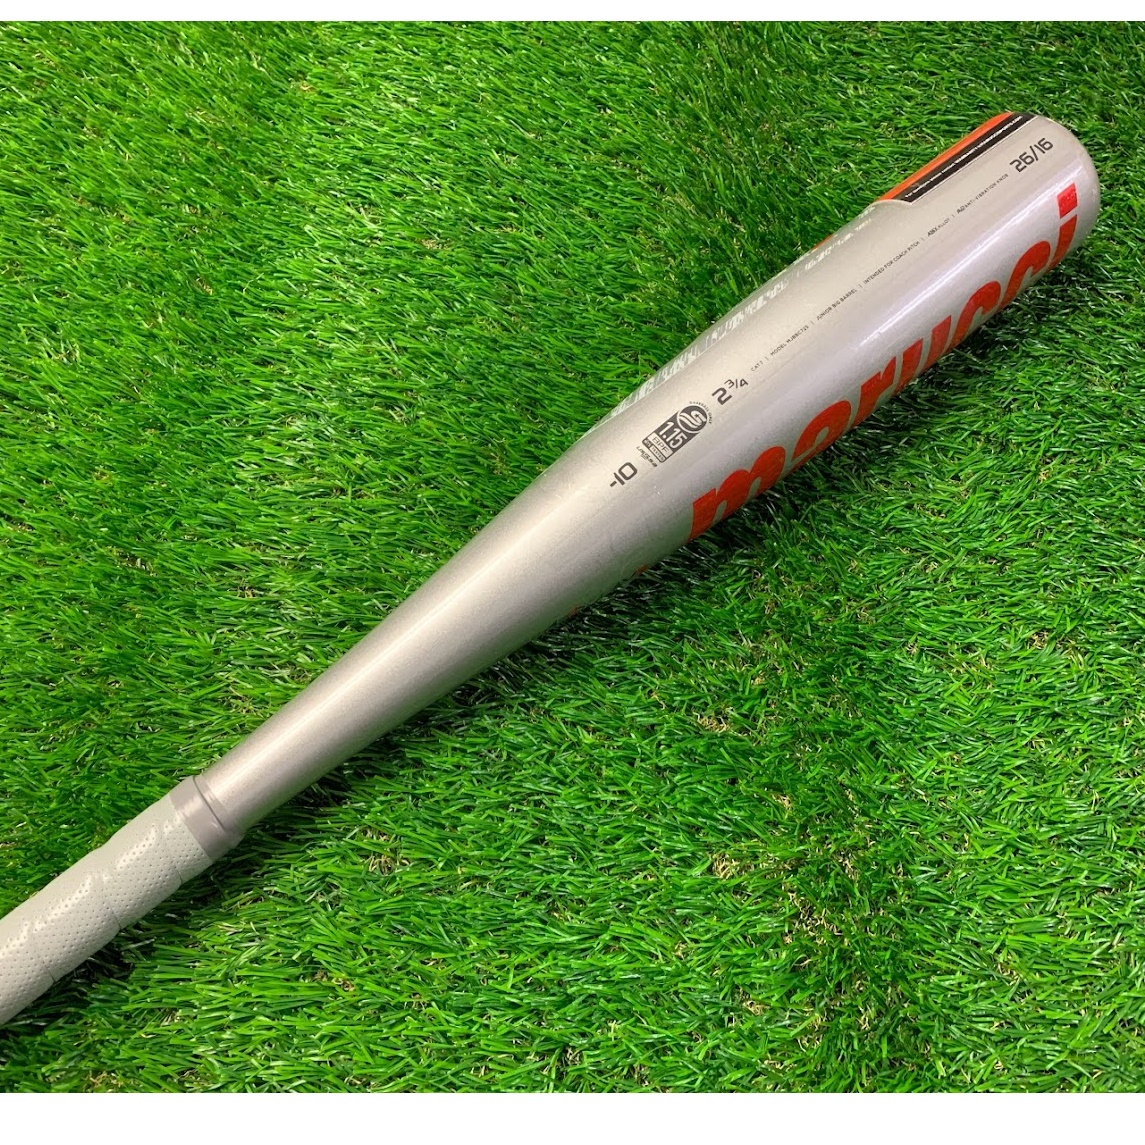 marucci-cat-7-jbb-baseball-bat-26-inch-16-oz-demo MJBBC72S-2616-DEMO Marucci  Demo bats are a great opportunity to pick up a high